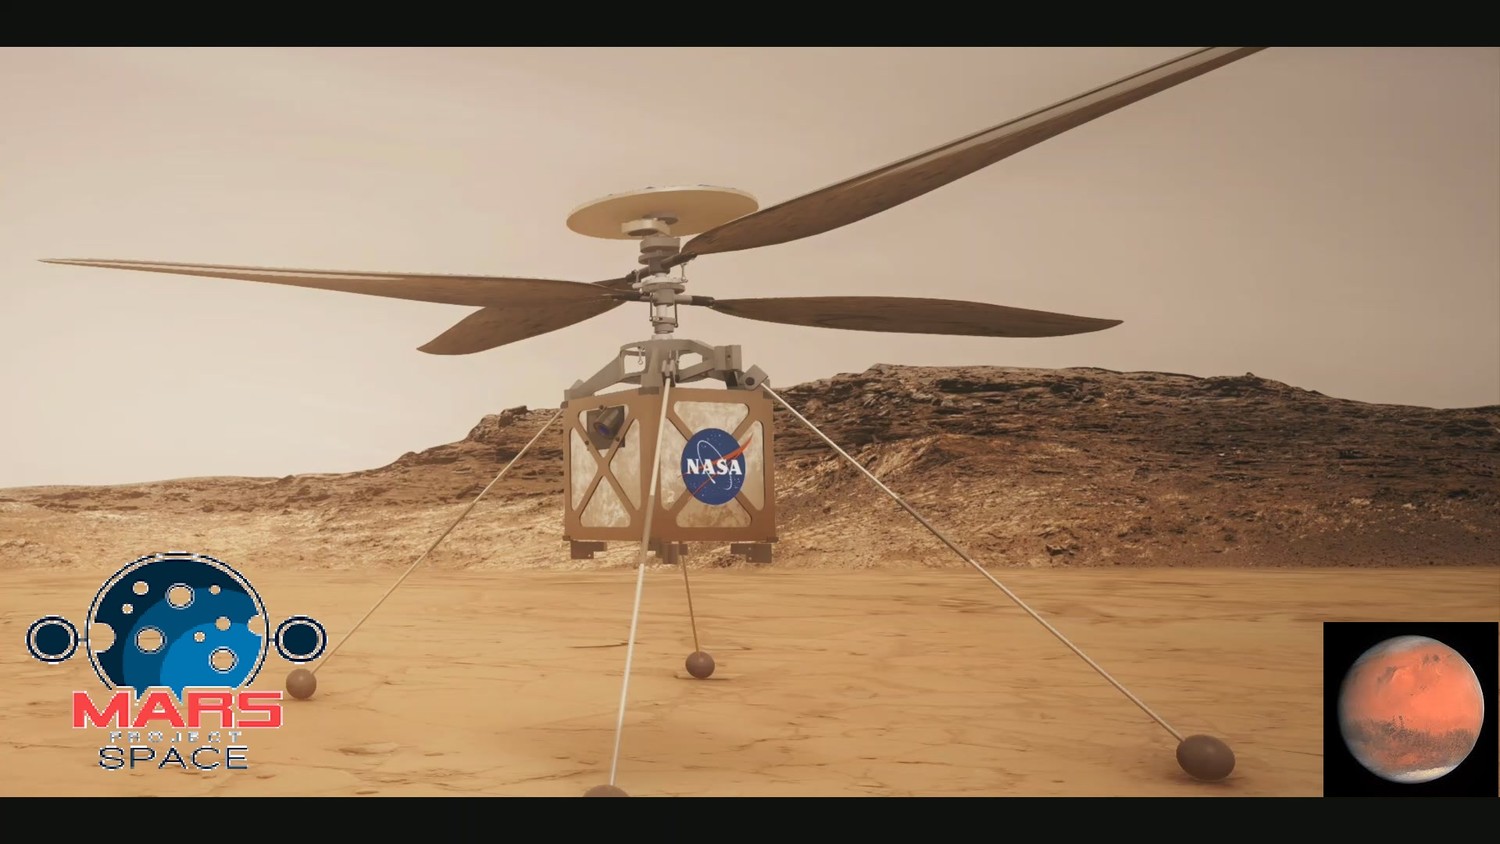 Миссия на Марс.NASA отправляет вертолет на Марс